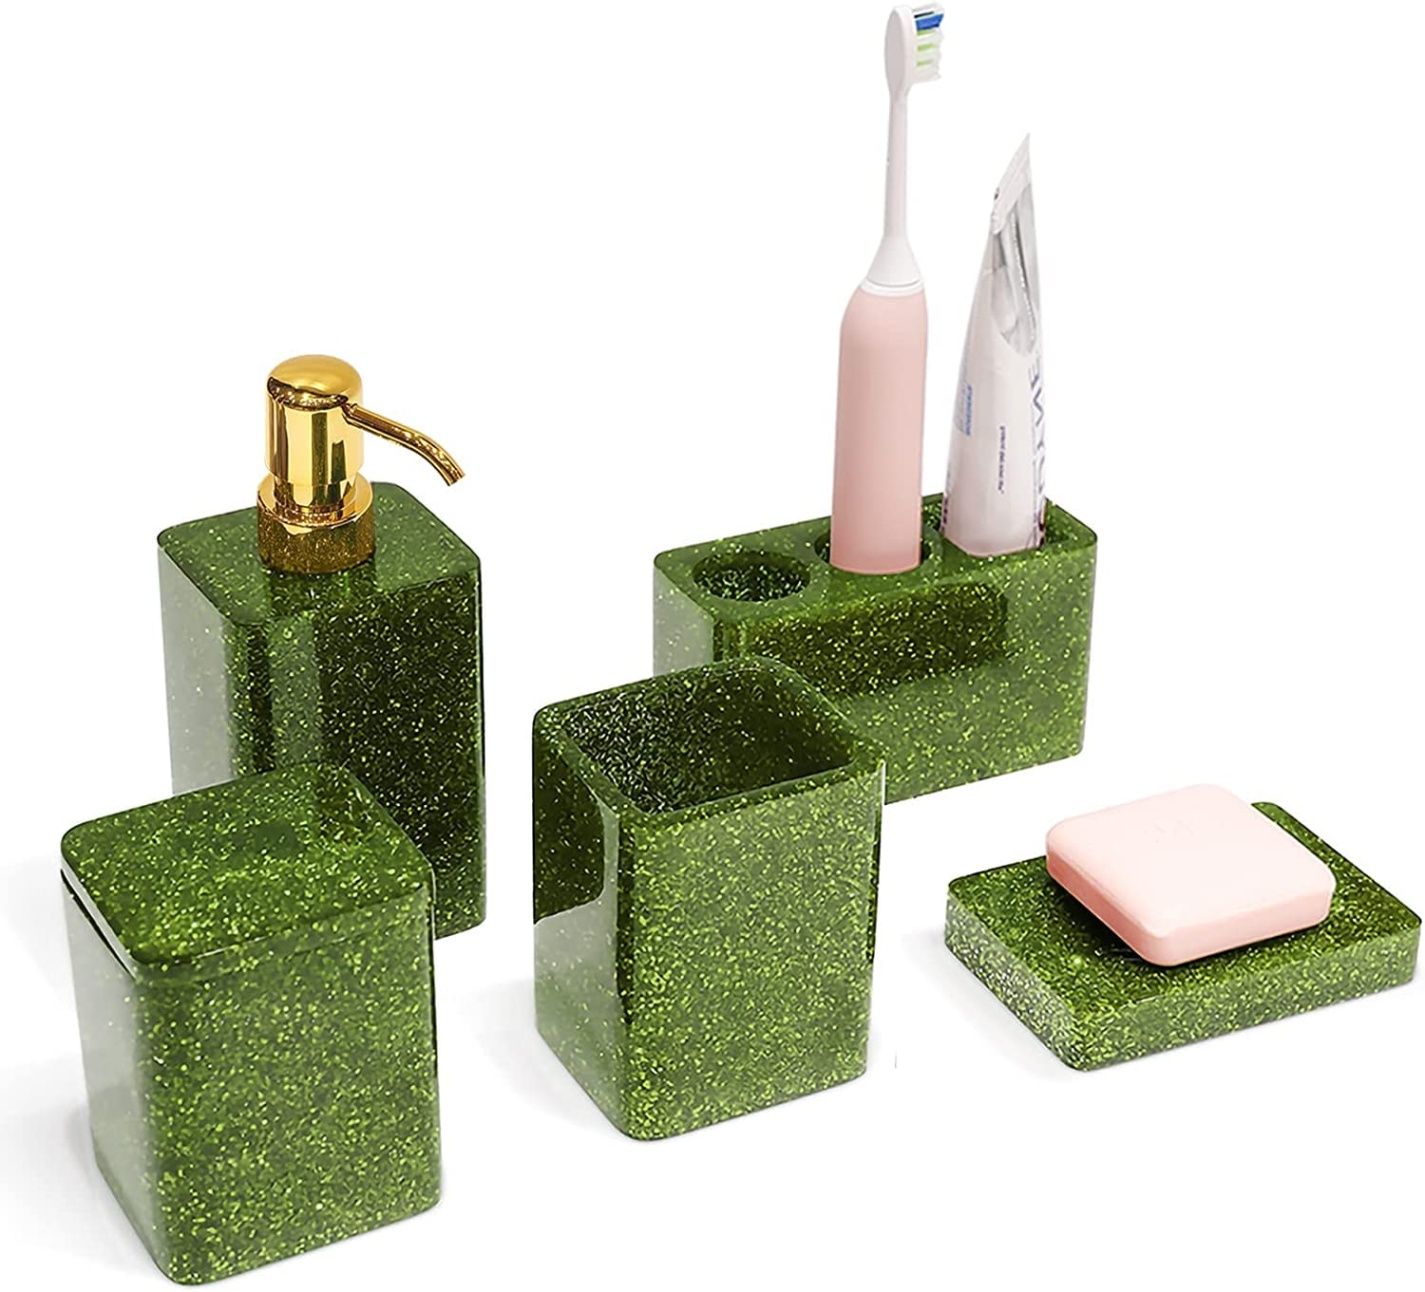 green bathroom accessories Niche Utama Home Pcs Bathroom Accessories Set,Green Bling Bathroom Decor Set Include Soap  Dispenser,Toothbrush Holder,Soap Dish,Qtip Holder,Tumbler,Premium Luxury